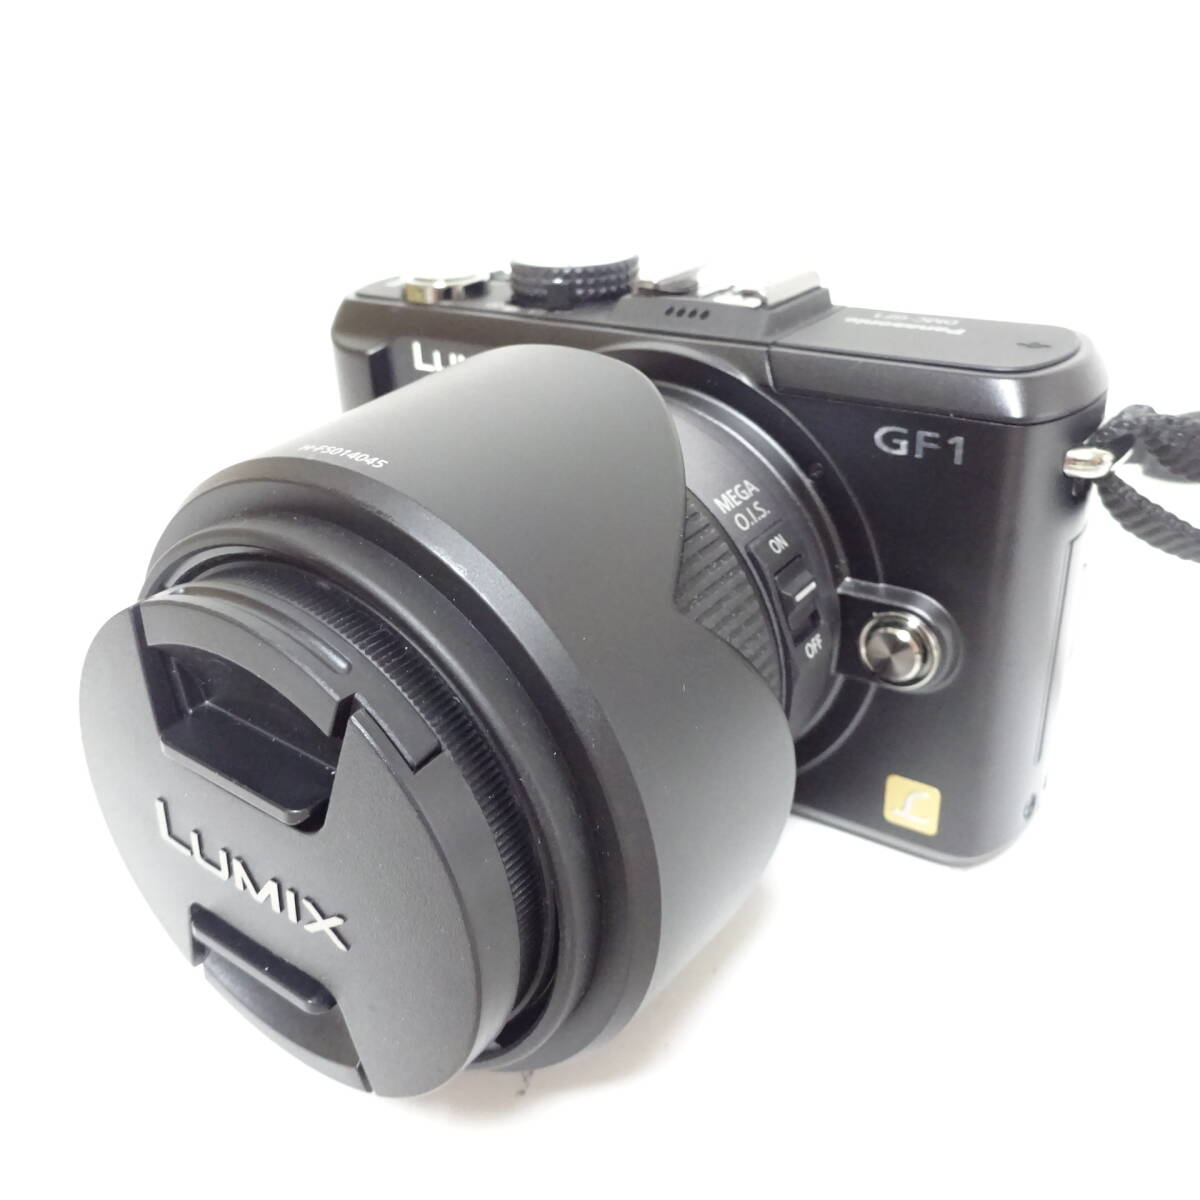  Panasonic LUMIX DMC-GF1 digital camera 1:3.5-5.6/14-45 lens Panasonic operation not yet verification junk 60 size shipping KK-2666749-209-mrrz